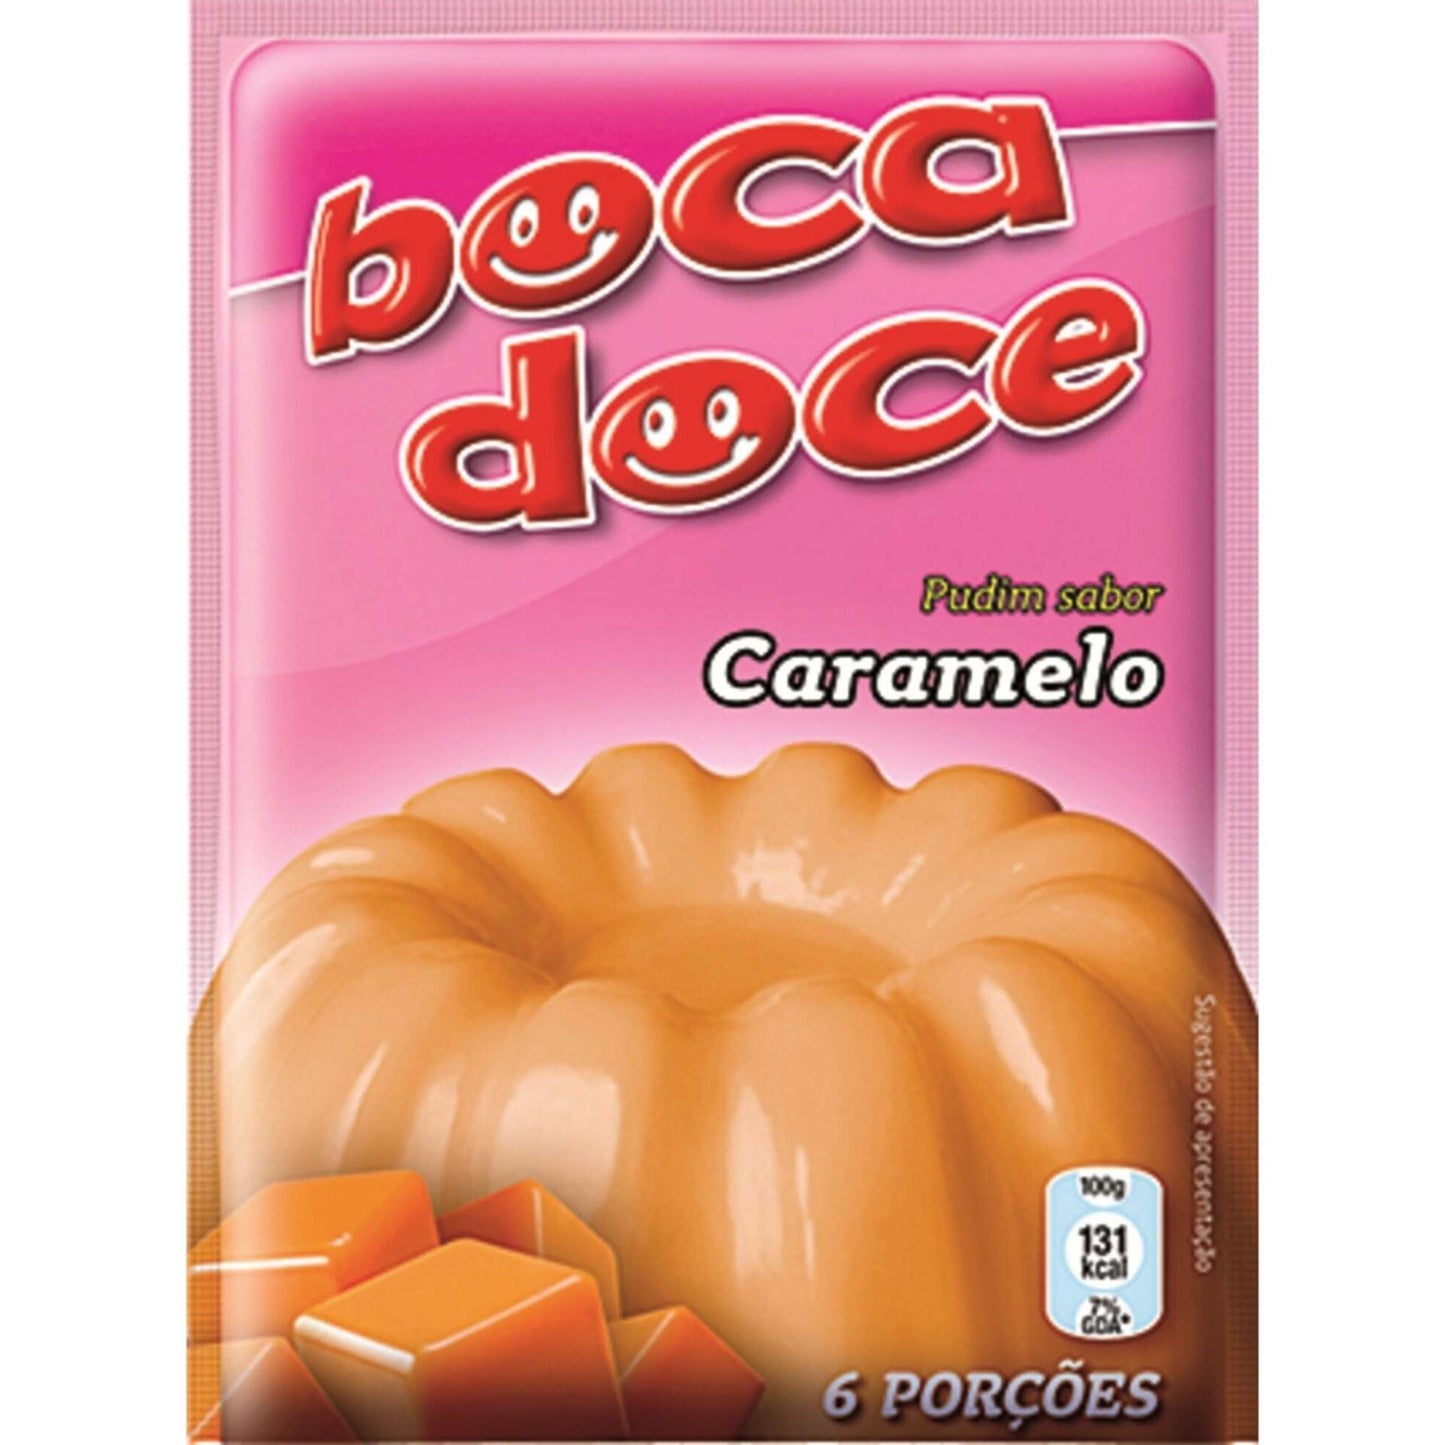 Caramel pudding Boca Doce 22g